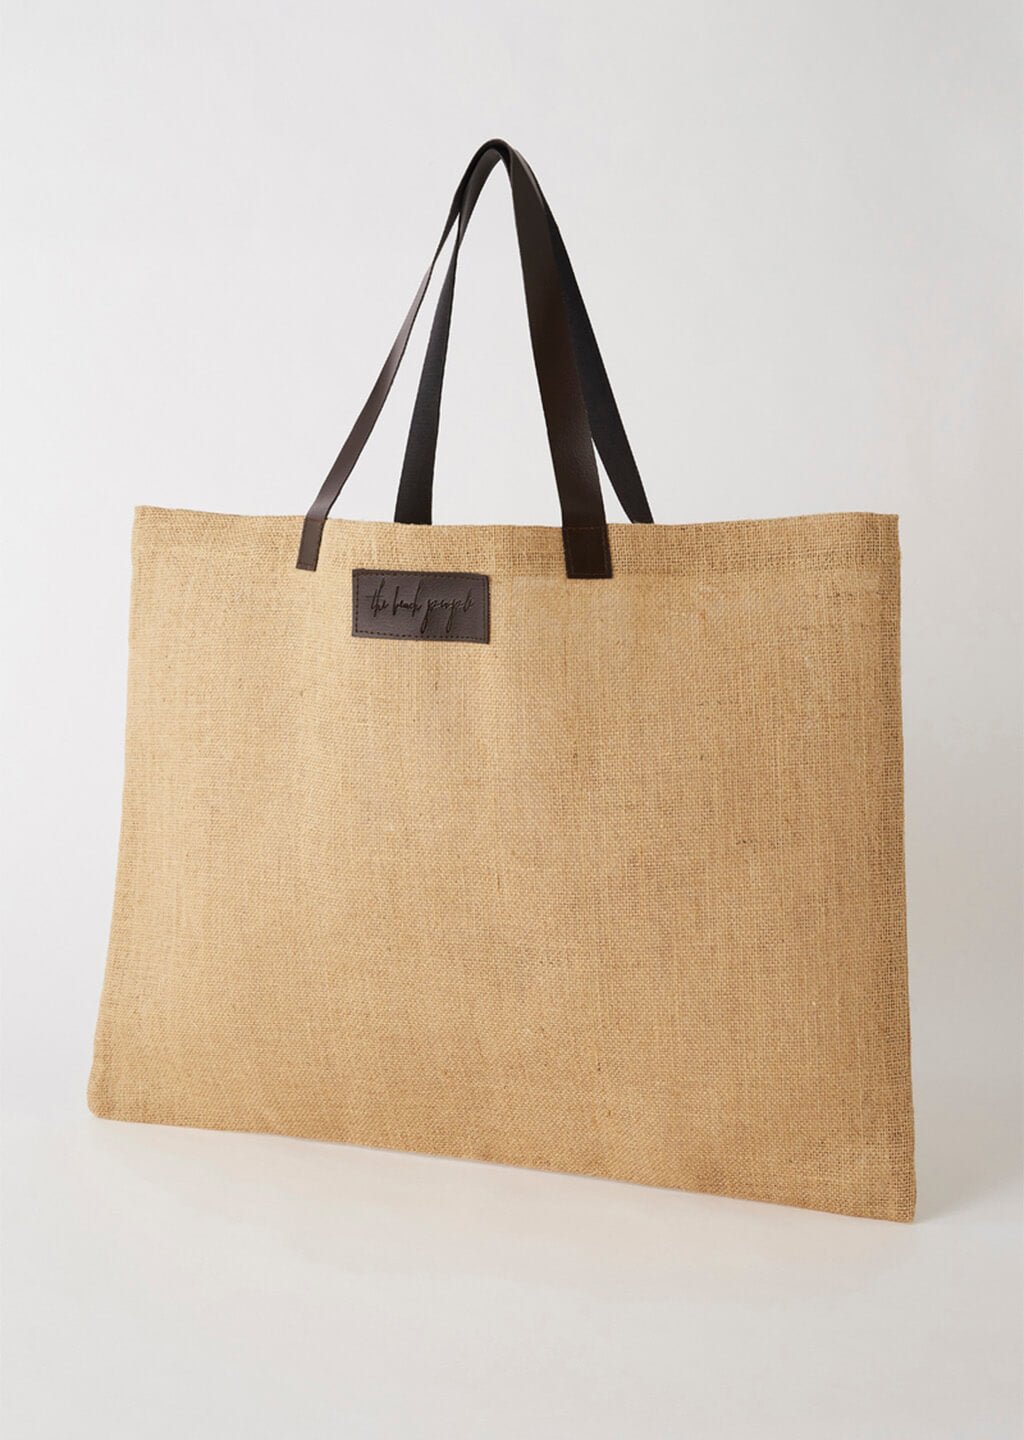 Buy Prakriti Maitri's Jute Bags triangle Shapped | Wedding Return gift bags  | Pack of 10 Online at Best Prices in India - JioMart.